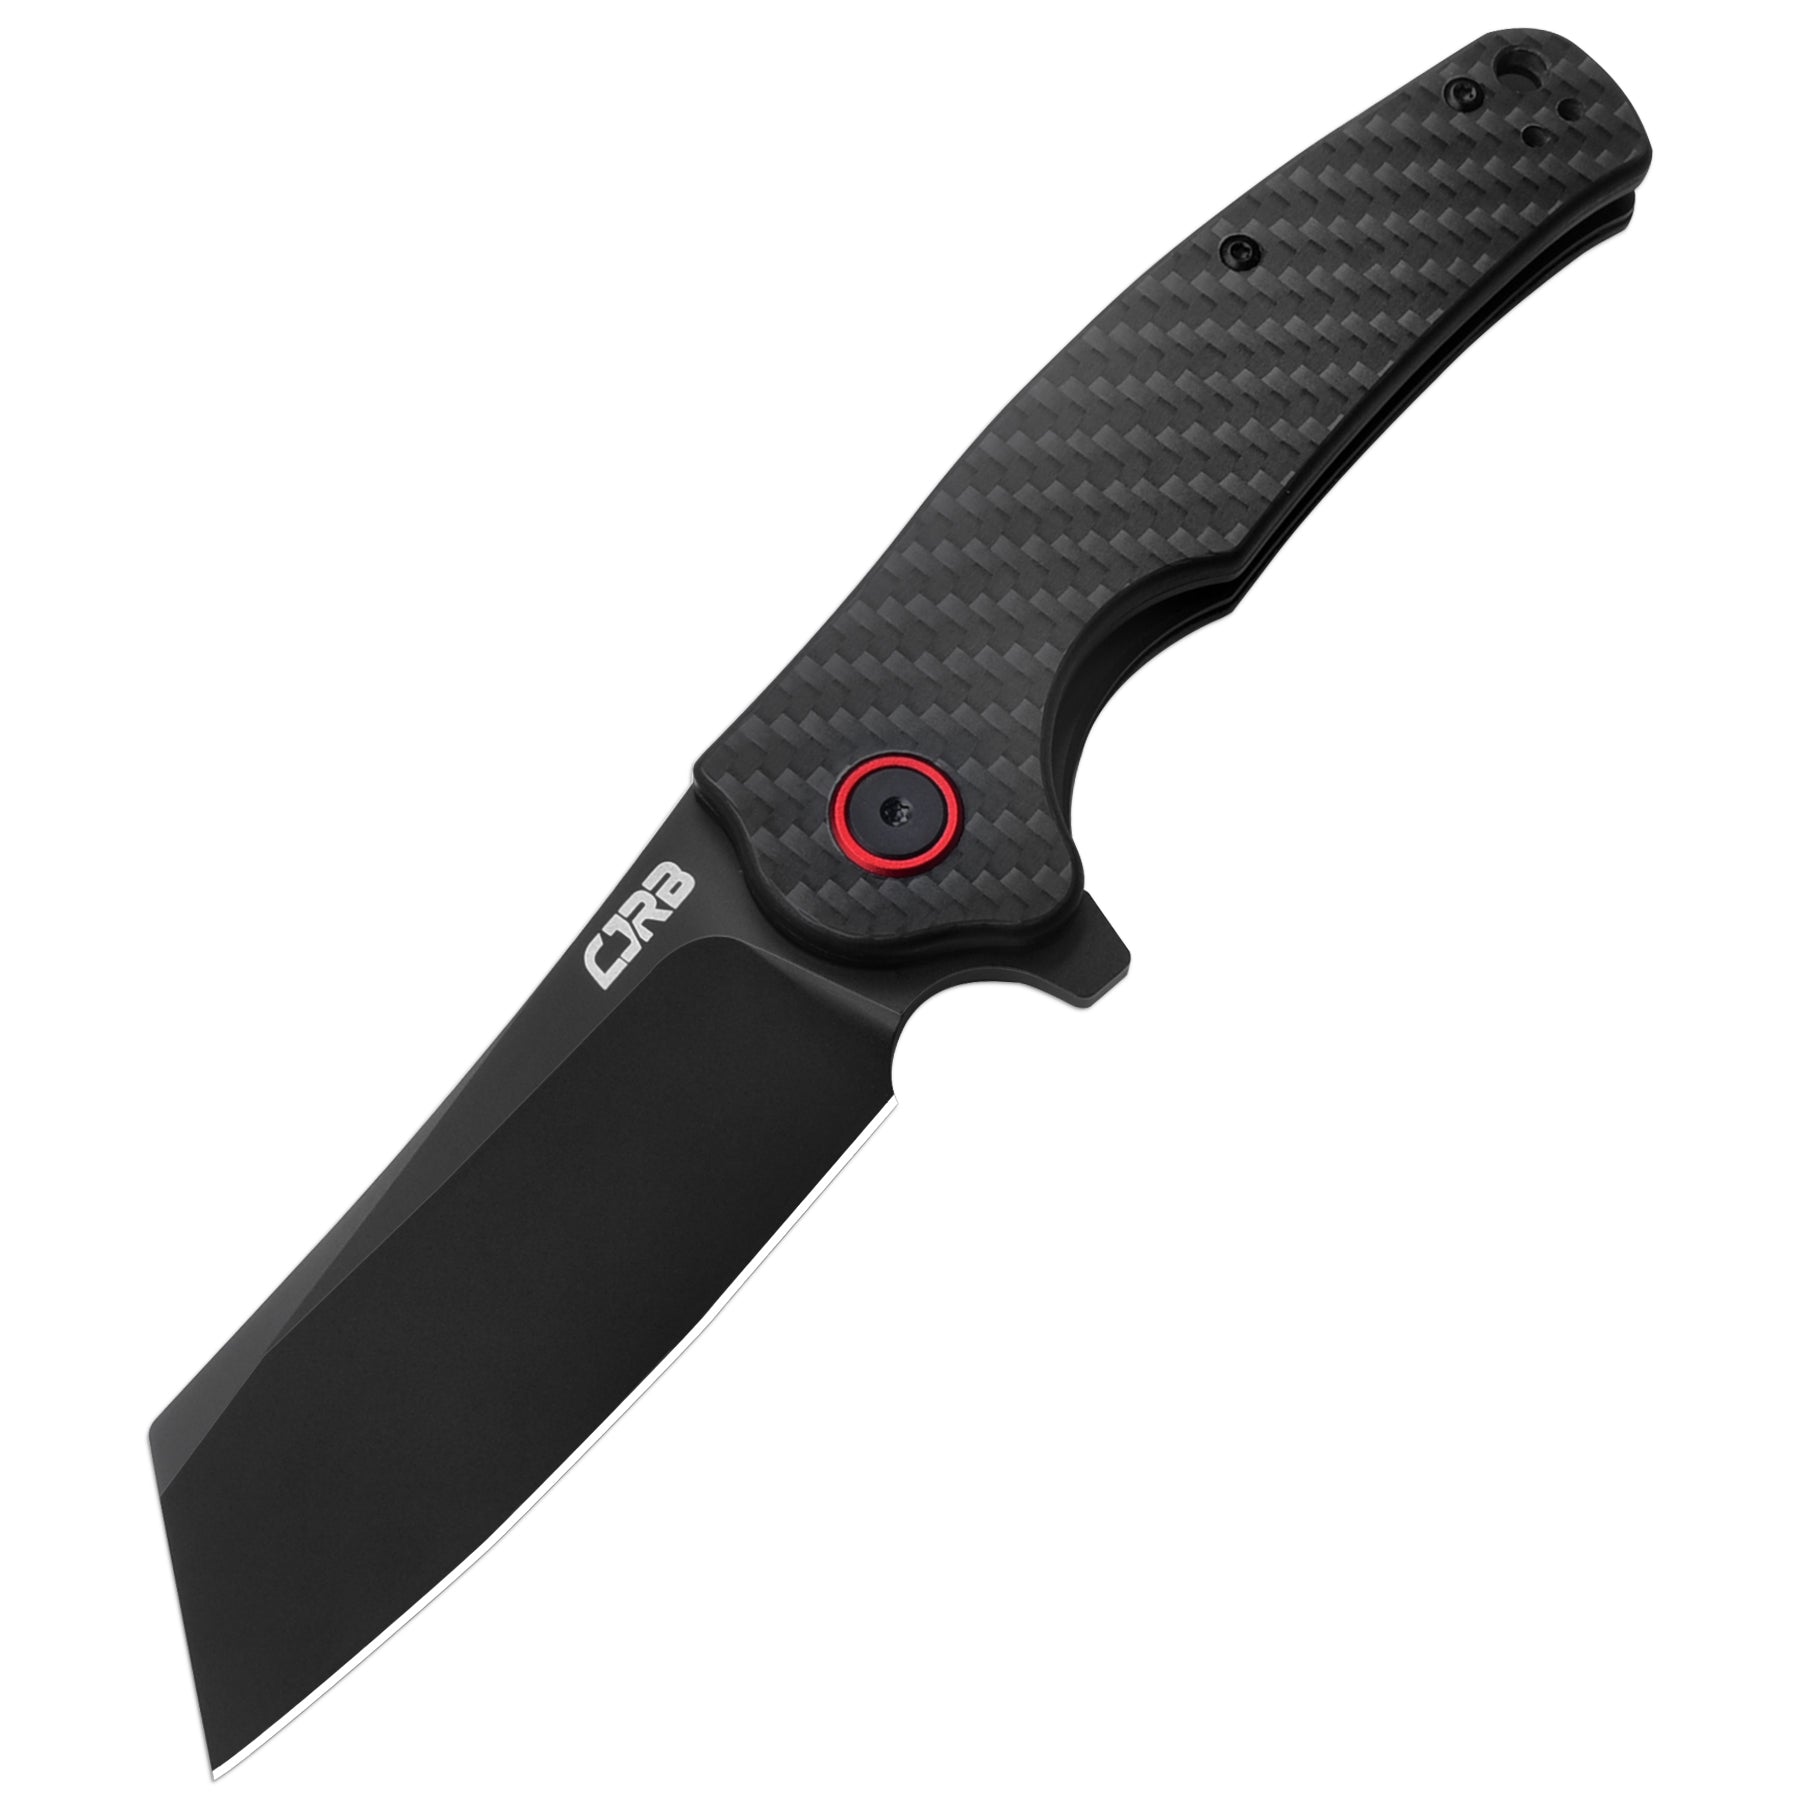 CJRB CRAG J1904 Folding Knife - AR-RPM9 Steel, Black PVD Blade